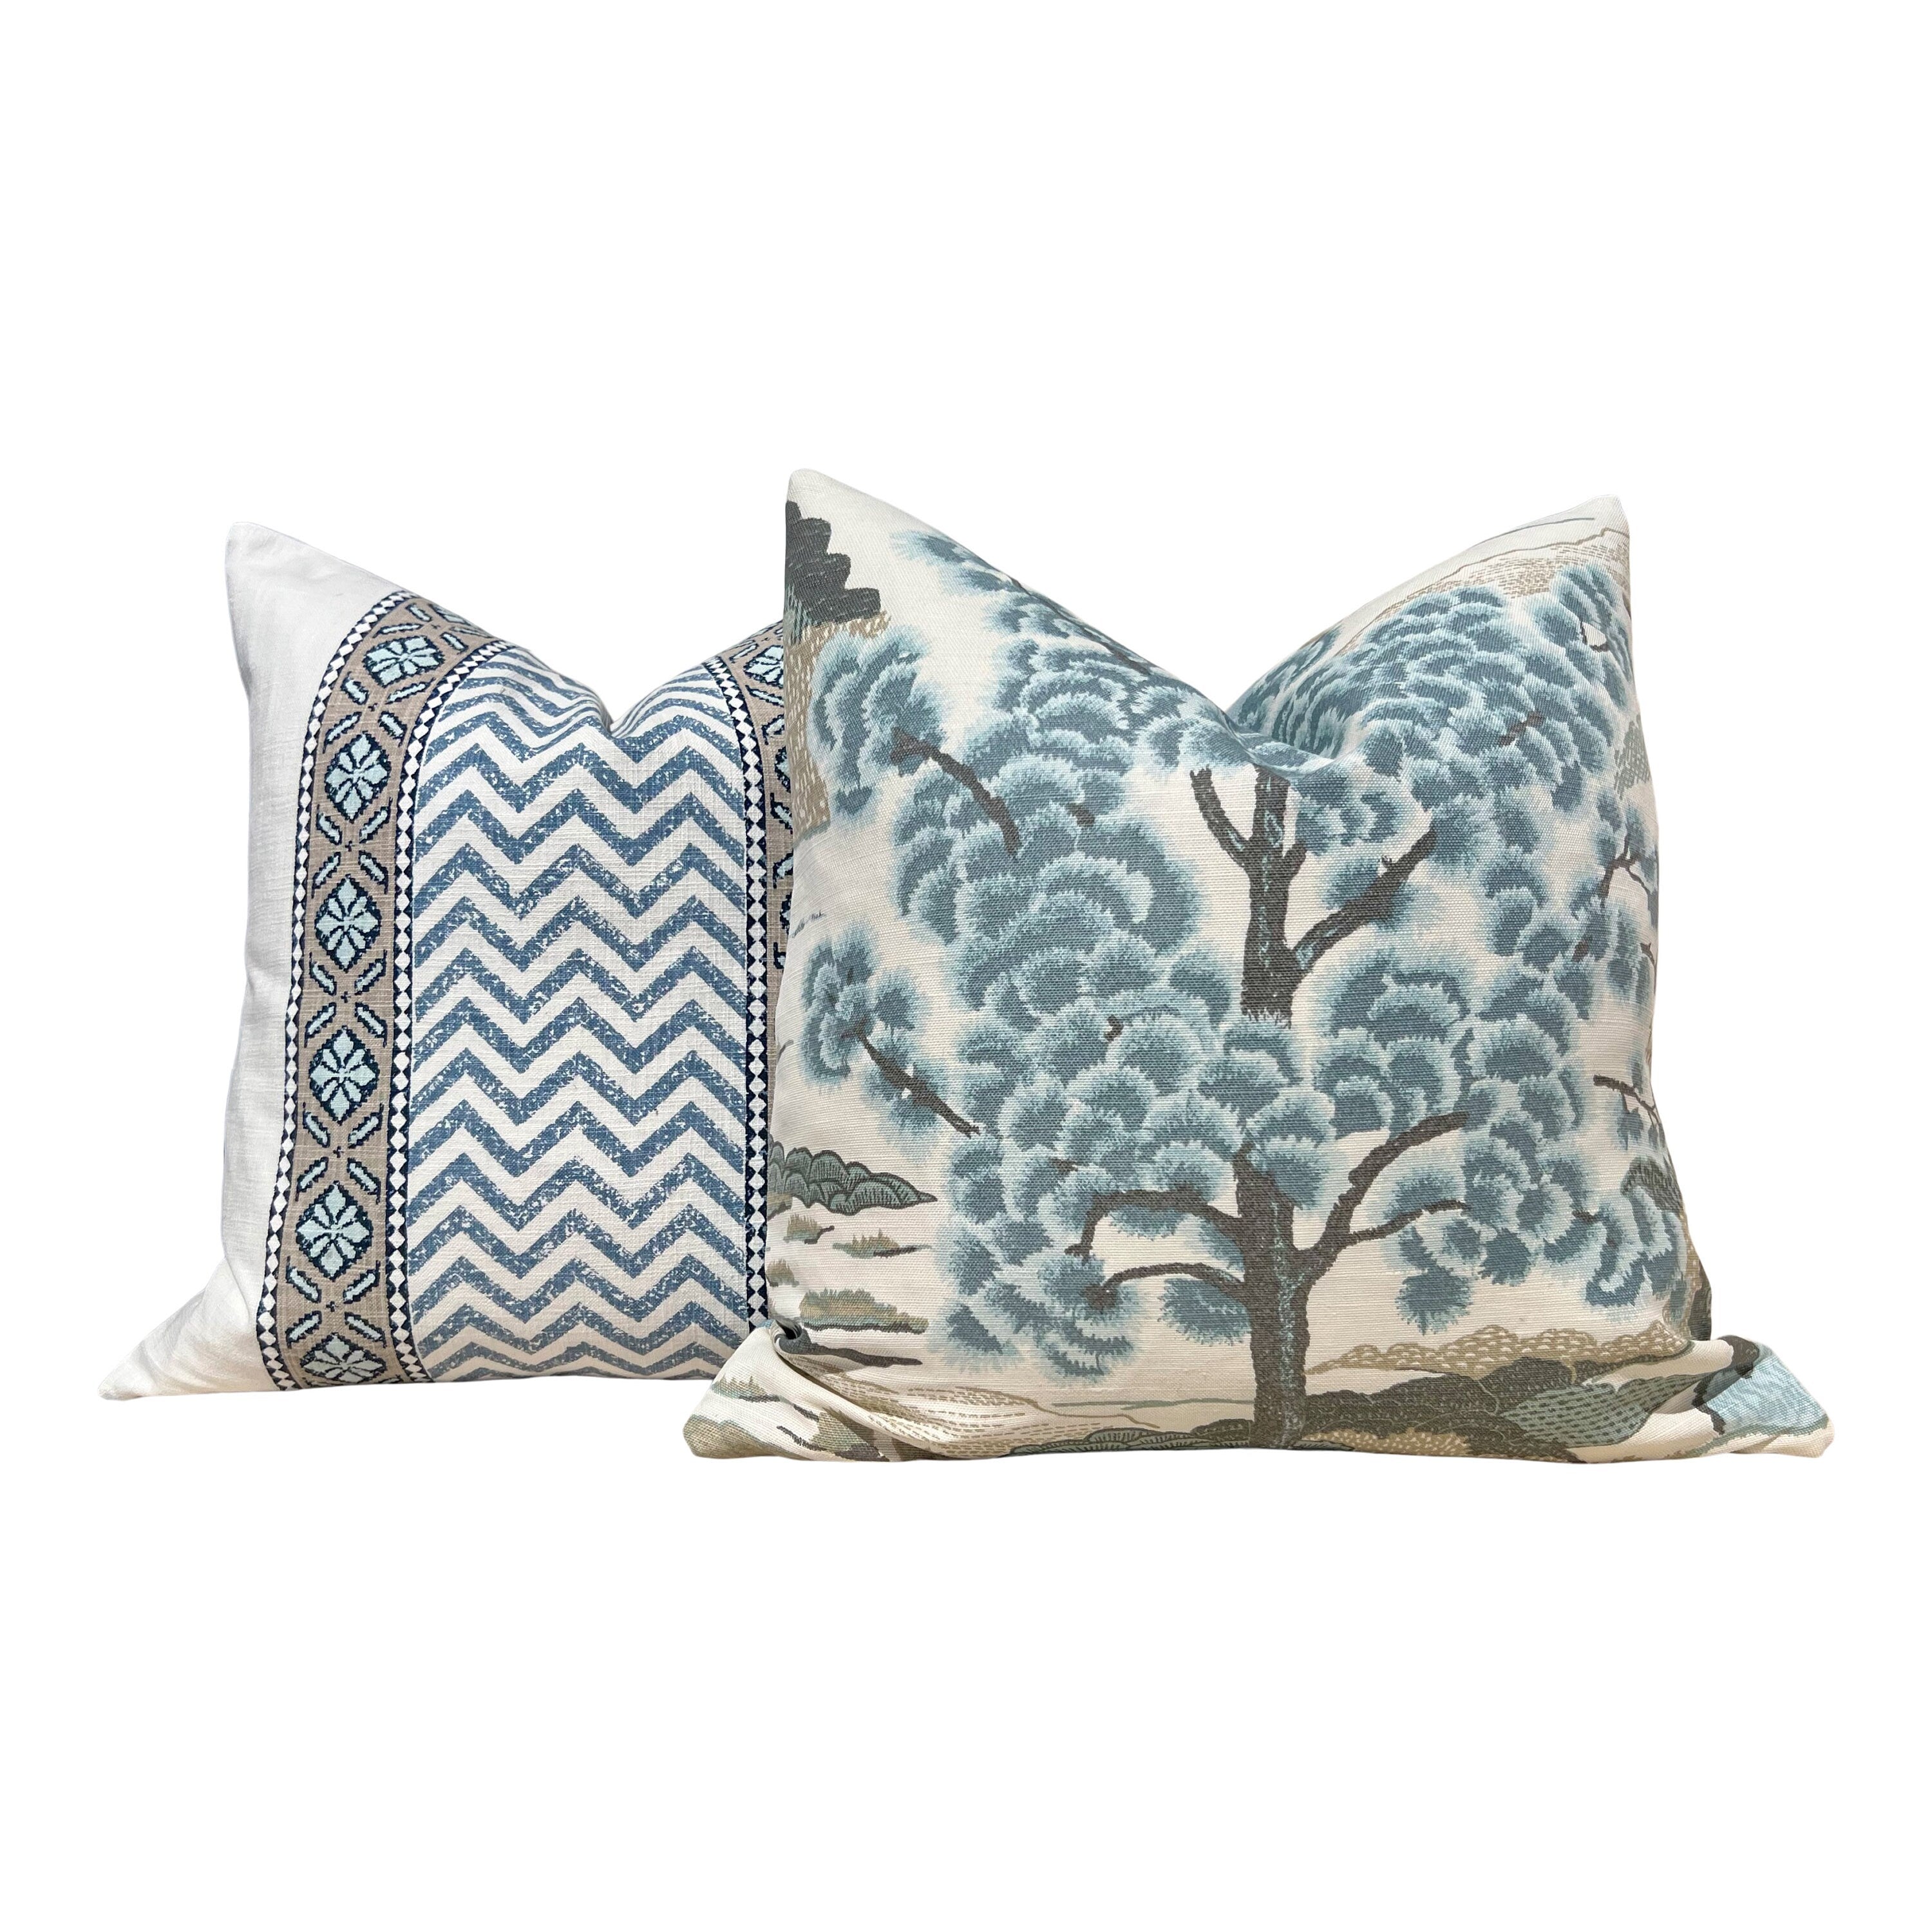 Designer Daintree Decorative Pillow in Aqua. Accent Botanical Pillow cover in Aqua Blue, Euro Sham Cotton Linen Cushion Case with Zipper